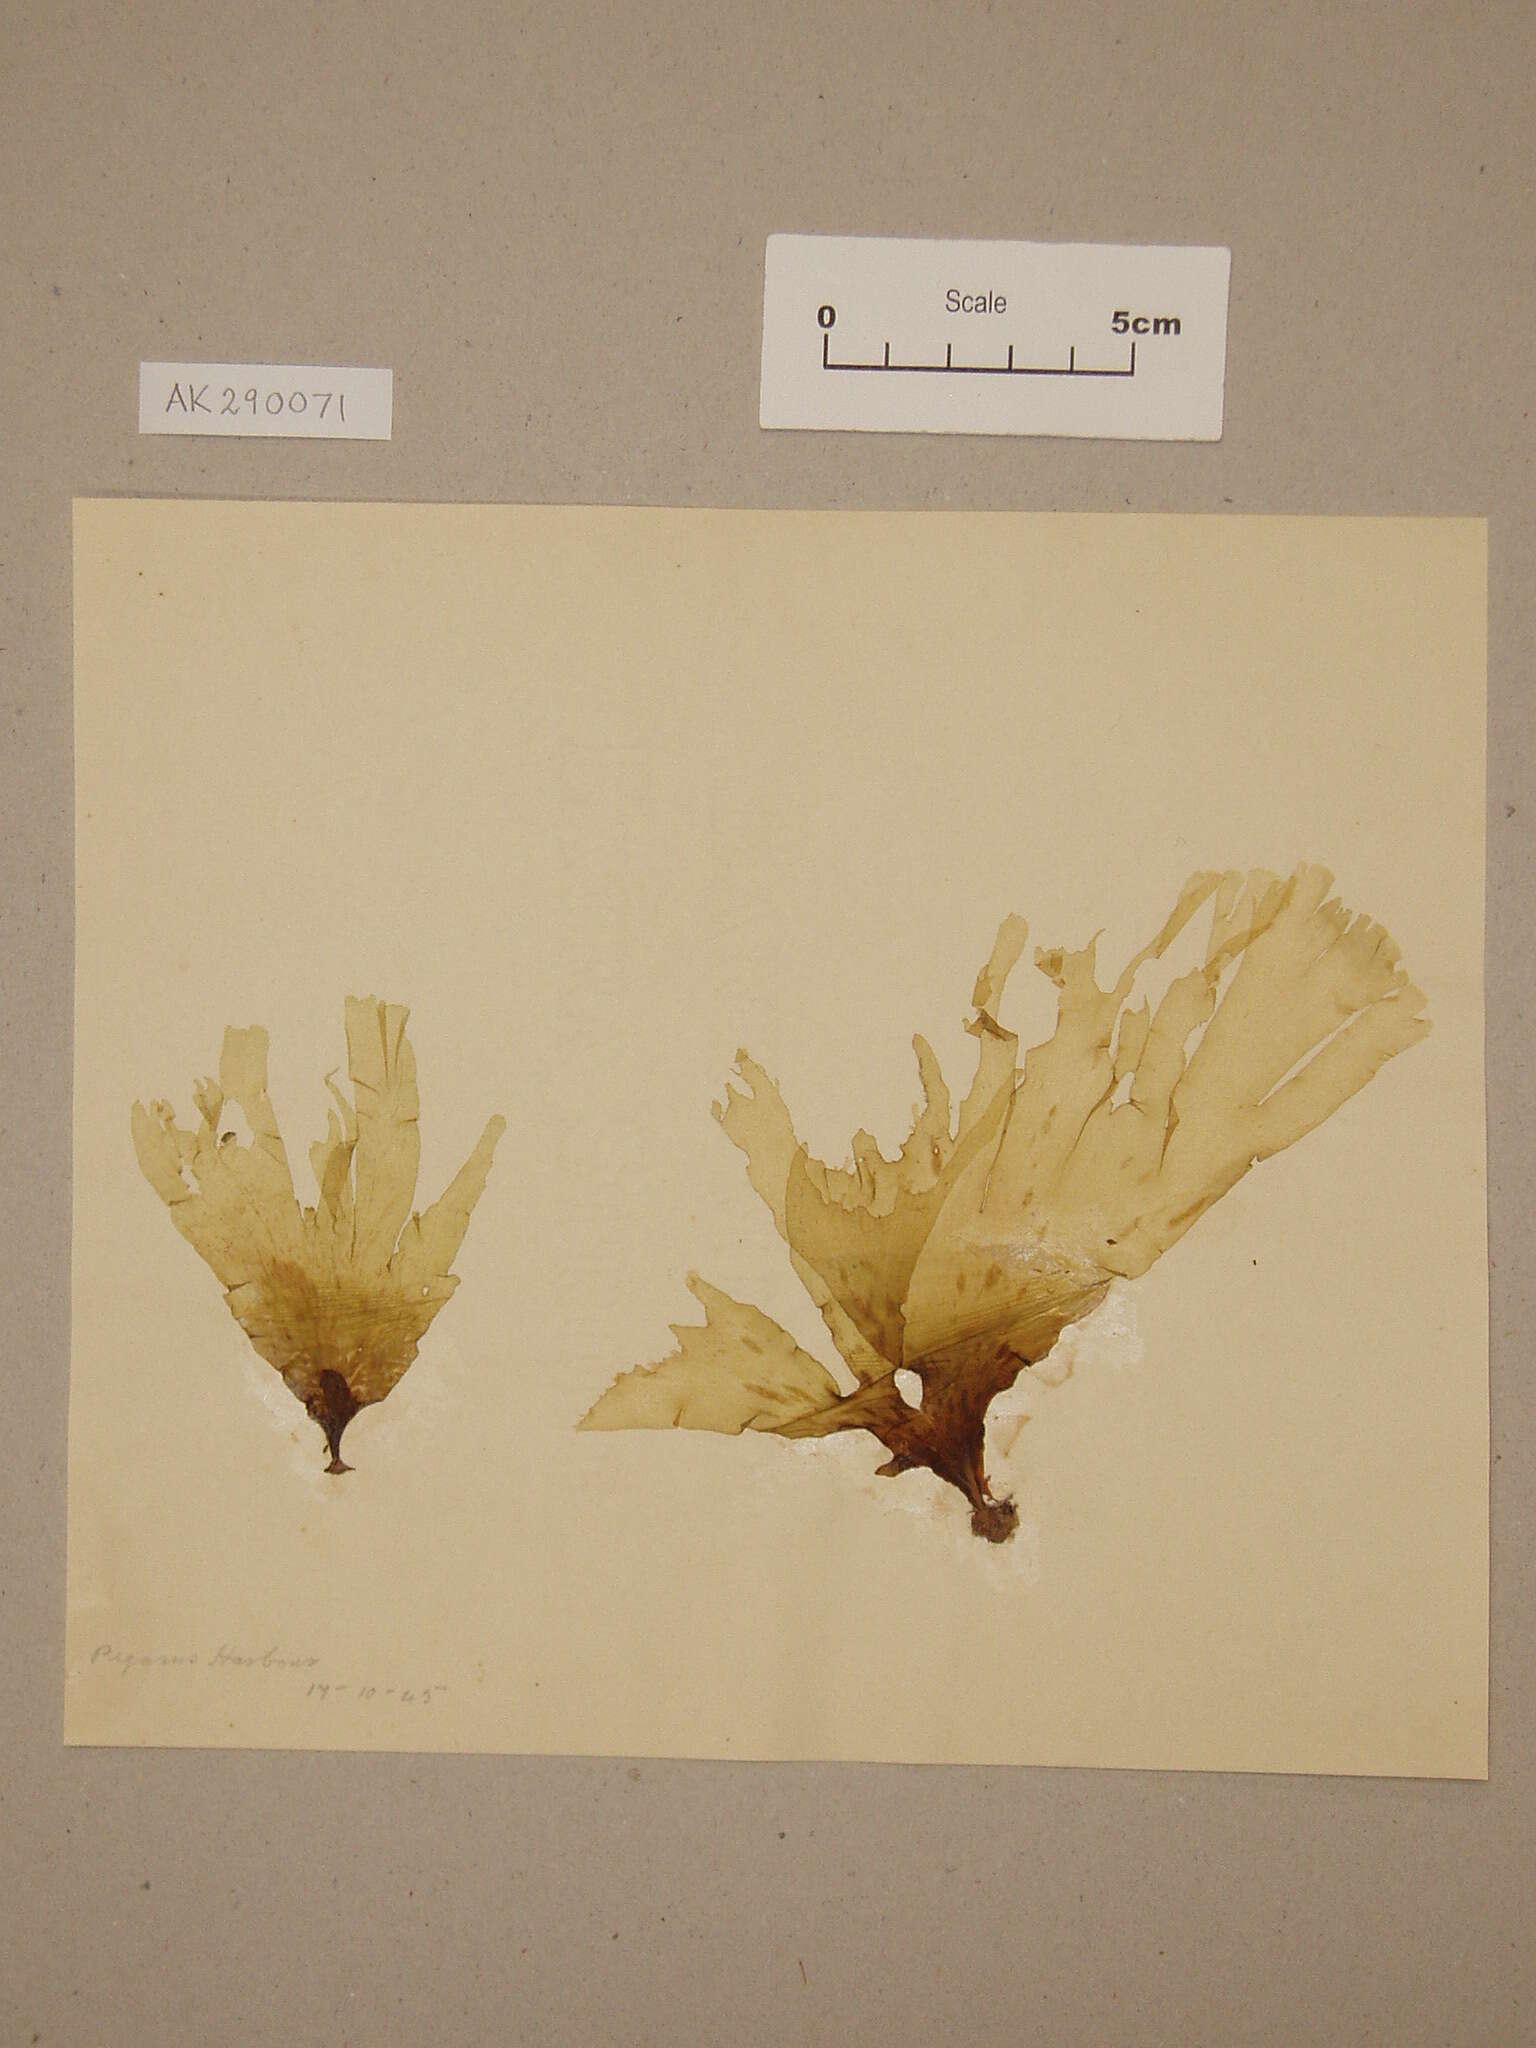 Image of Spatoglossum chapmanii Lindauer 1946